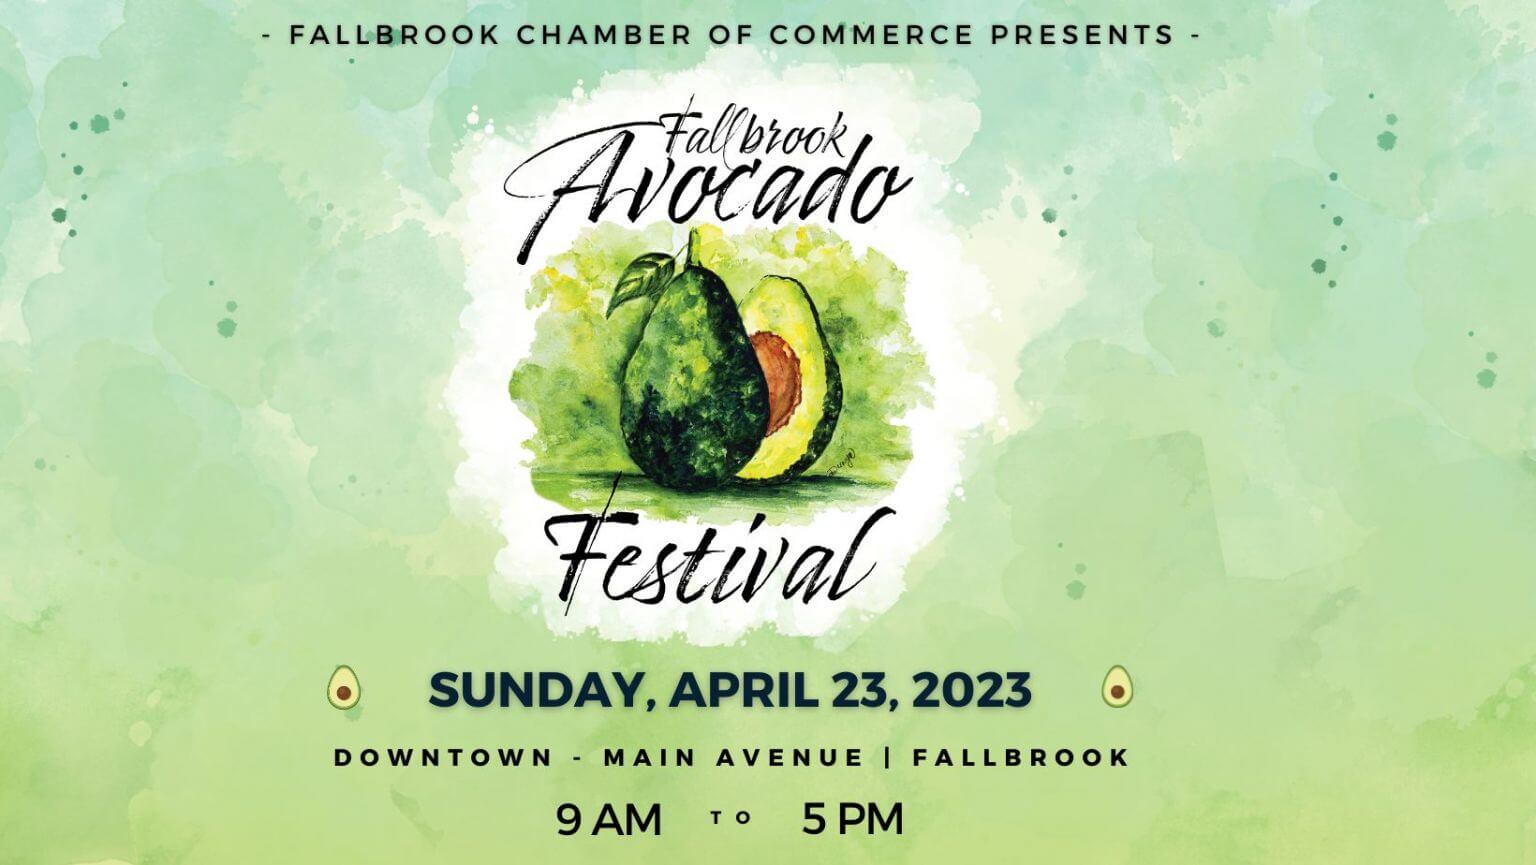 Avocado Festival Fallbrook Chamber of Commerce